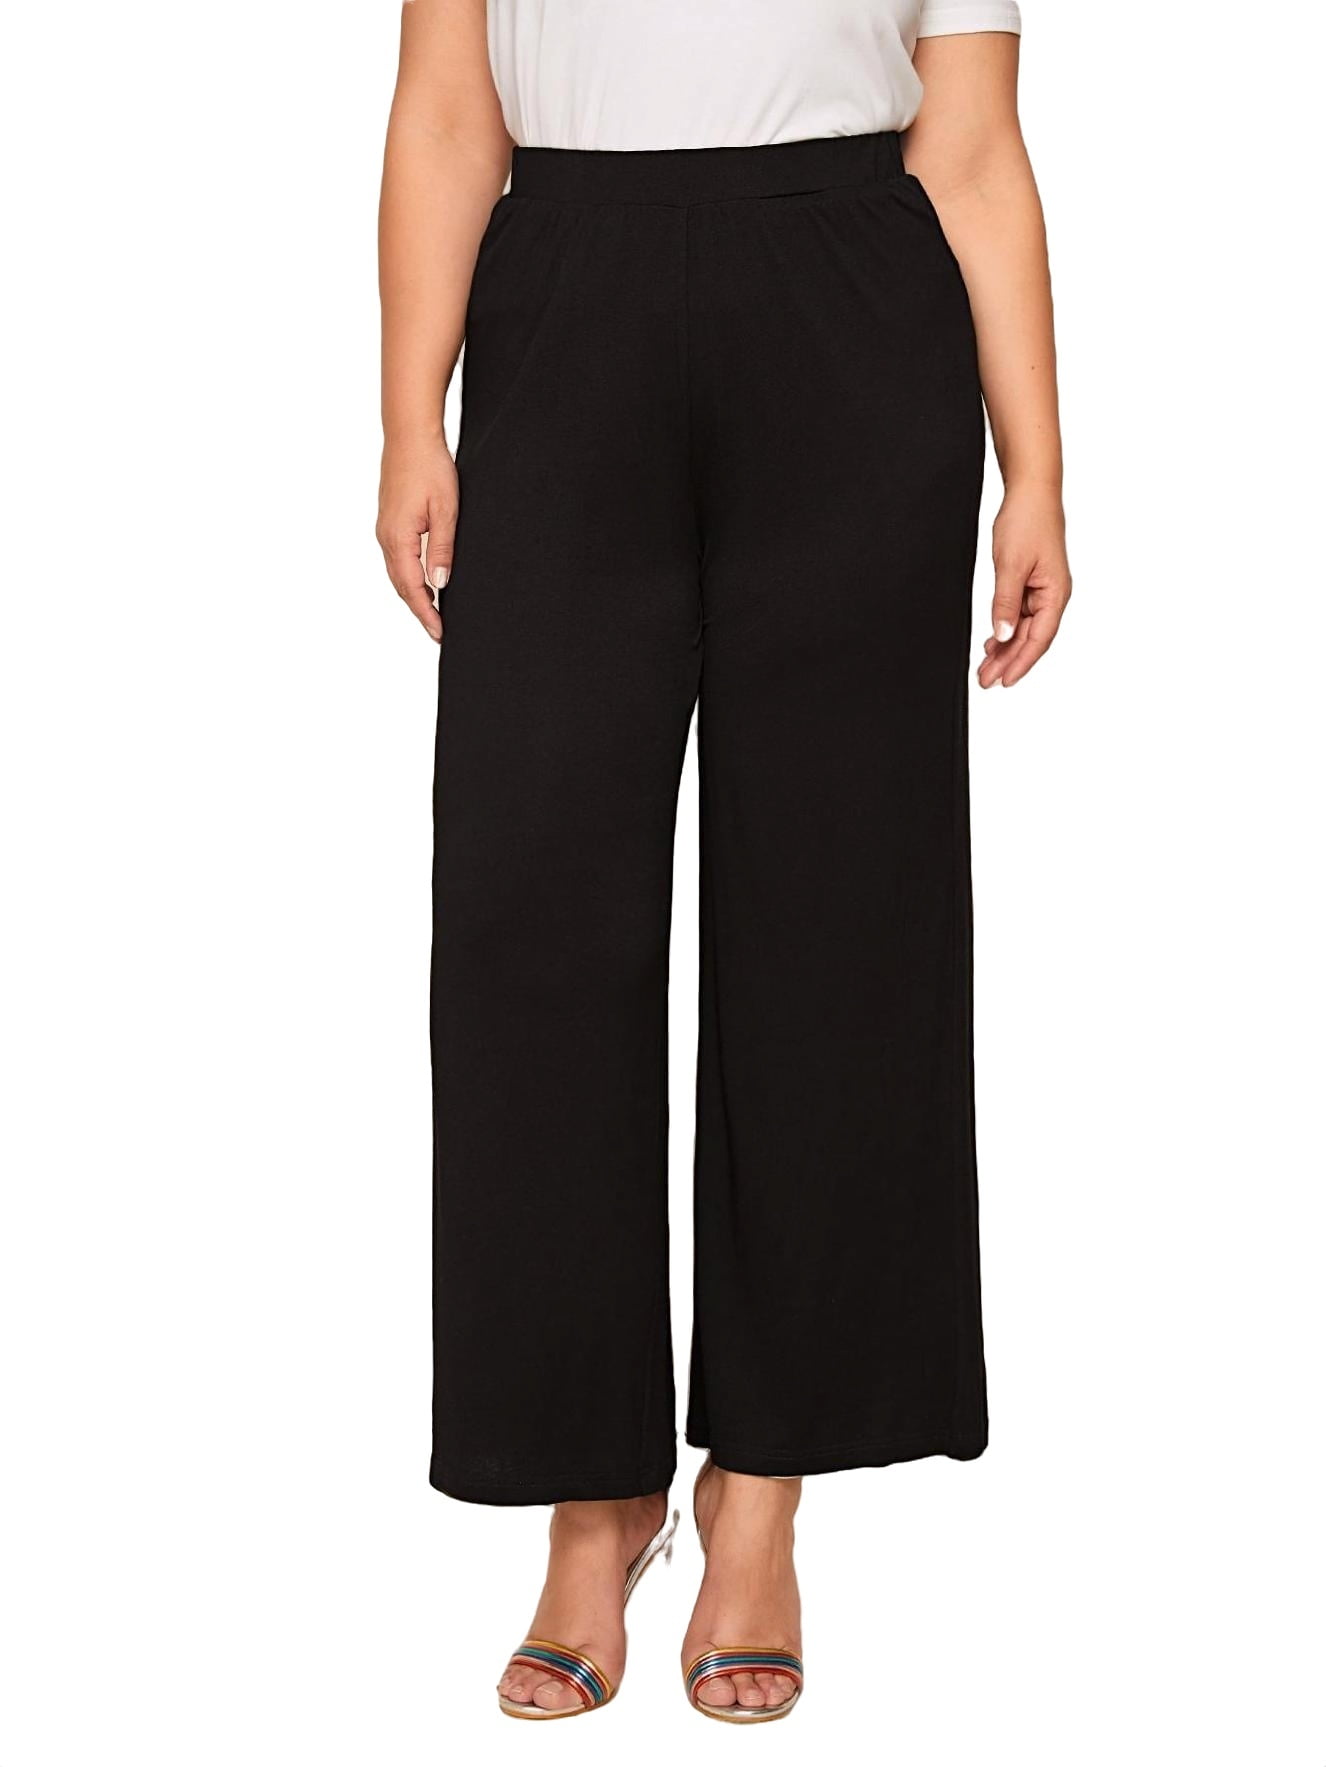 Elegant Solid Wide Leg Black Plus Size Pants (Women's) - Walmart.com